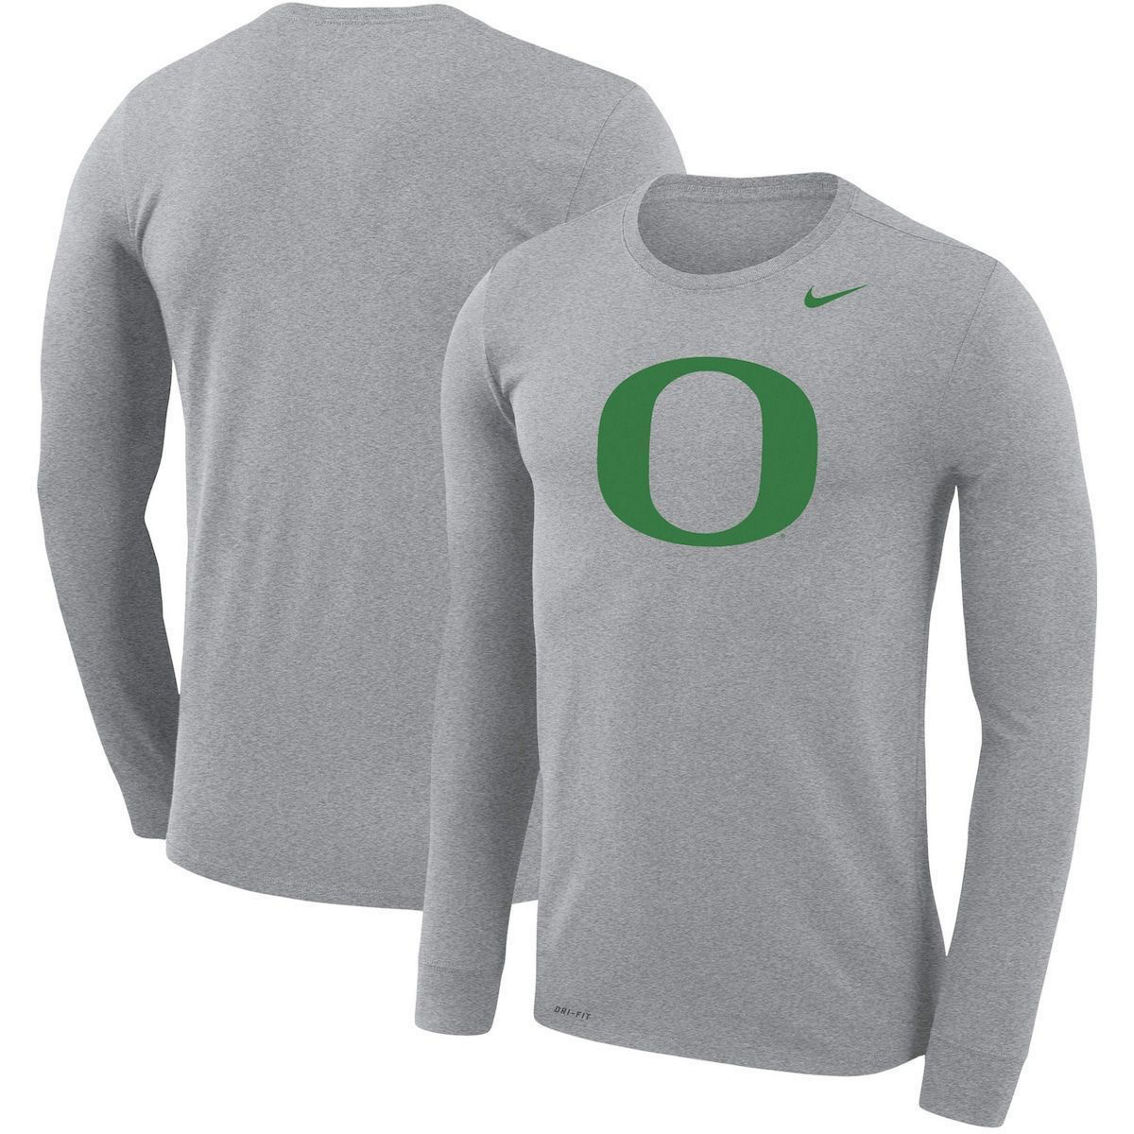 Men's Nike Heathered Gray Oregon Ducks School Logo Legend Performance Long Sleeve T-Shirt - Image 2 of 4